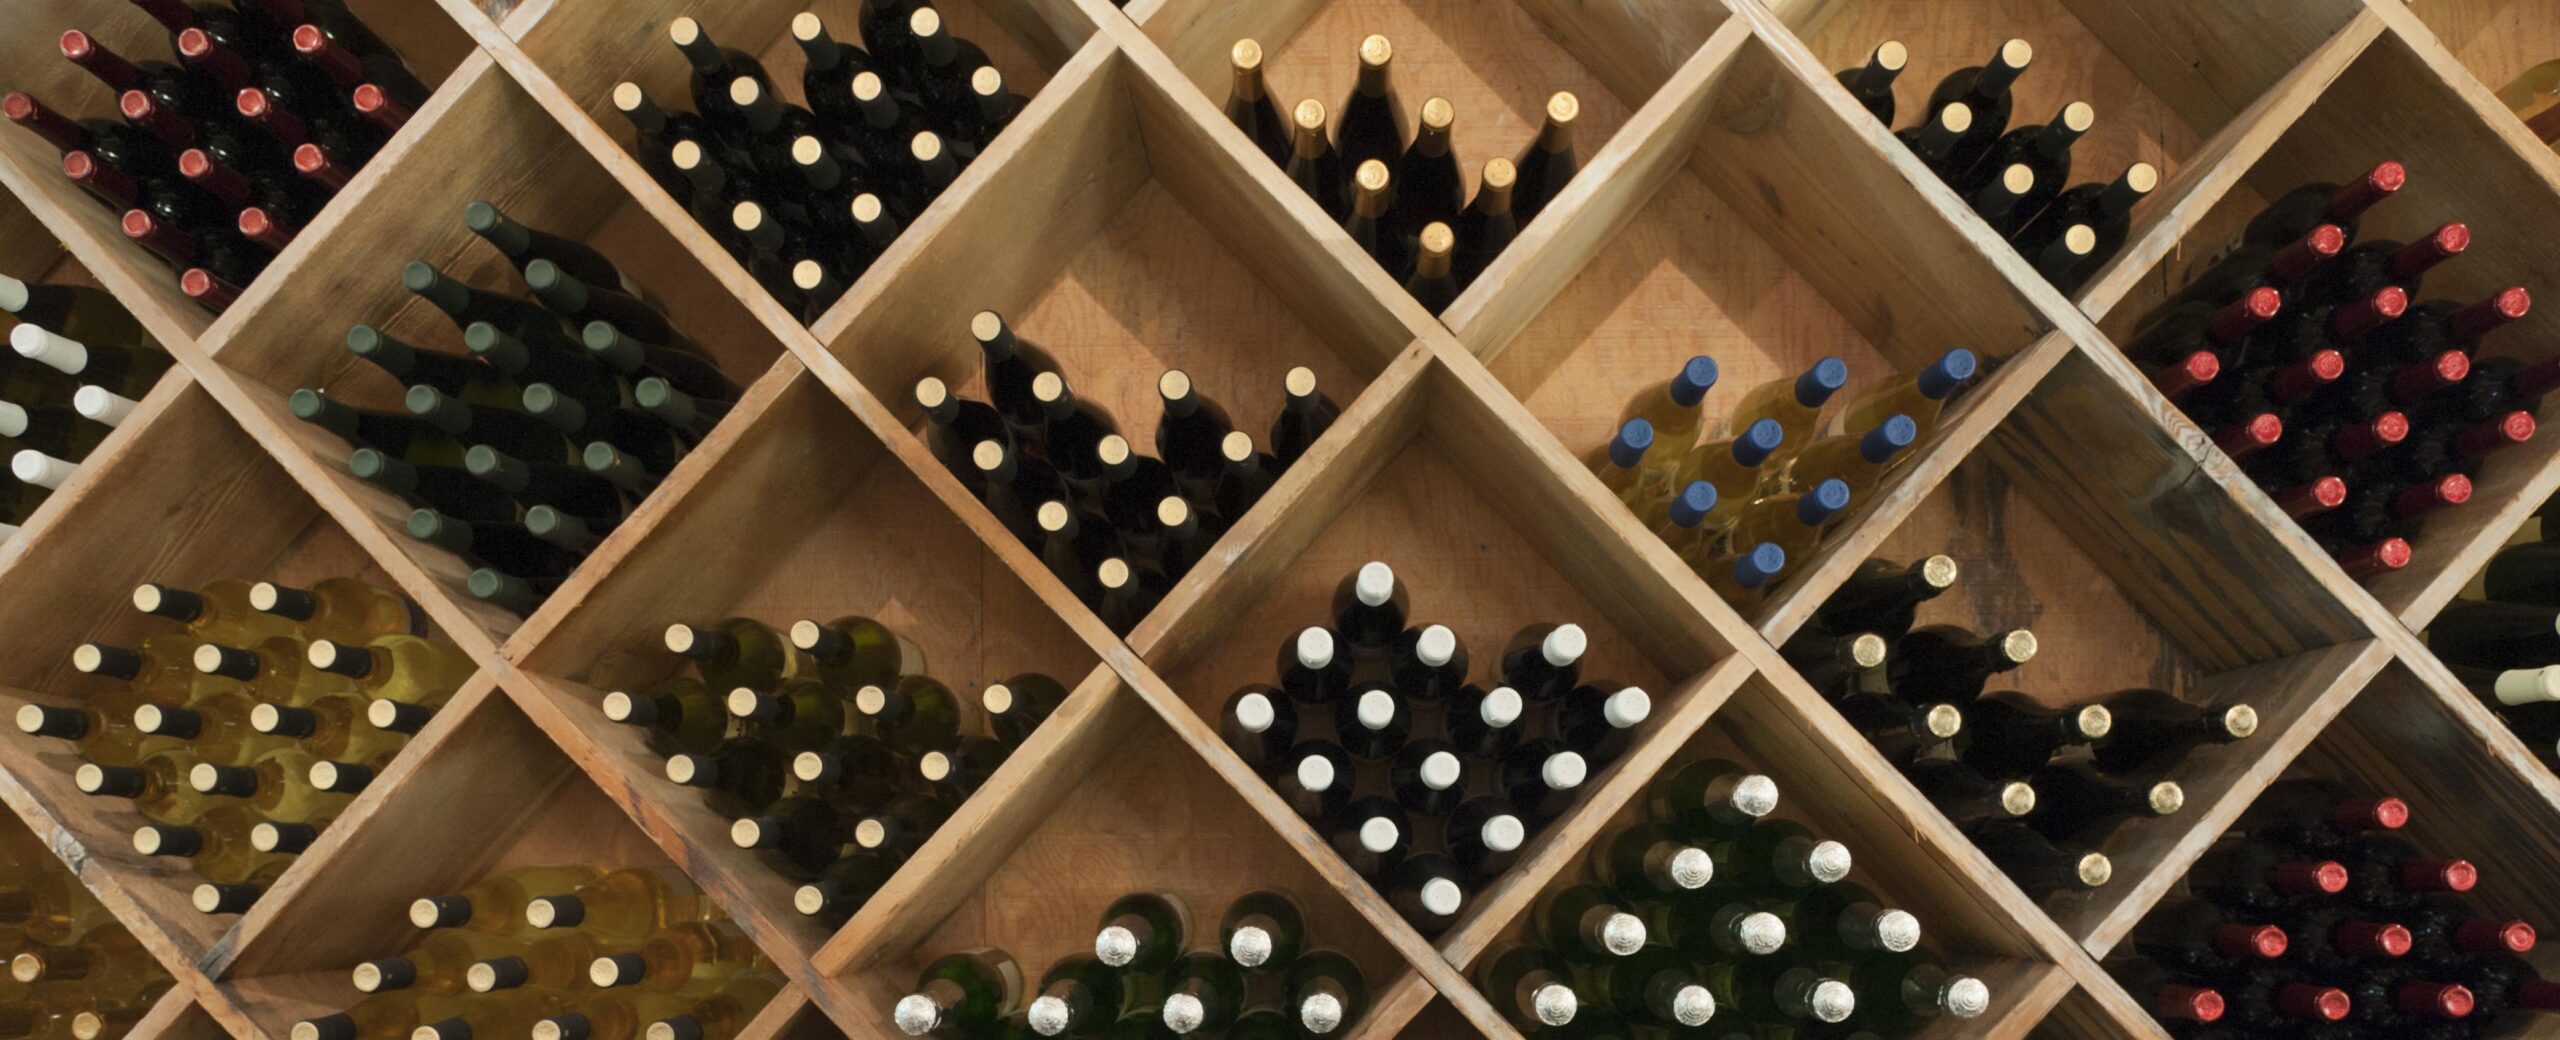 Wine Bottles on display in diagonal boxes